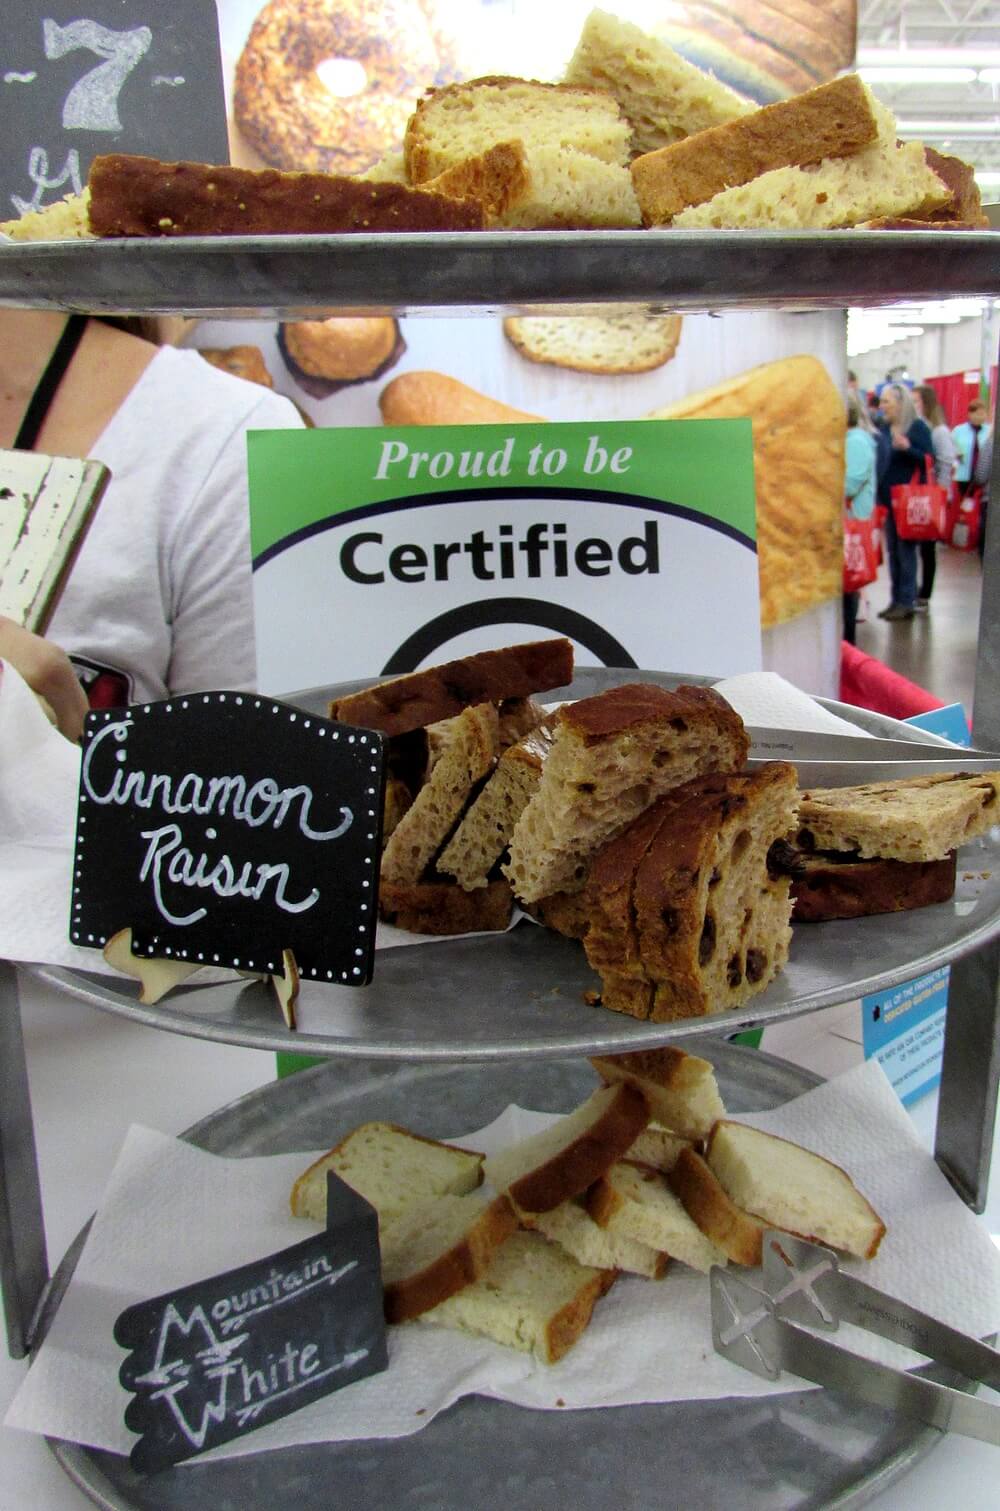 Photo of Canyon Bakehouse Gluten-Free bread display, ft. Cinnamon Raisin, and Mountain White